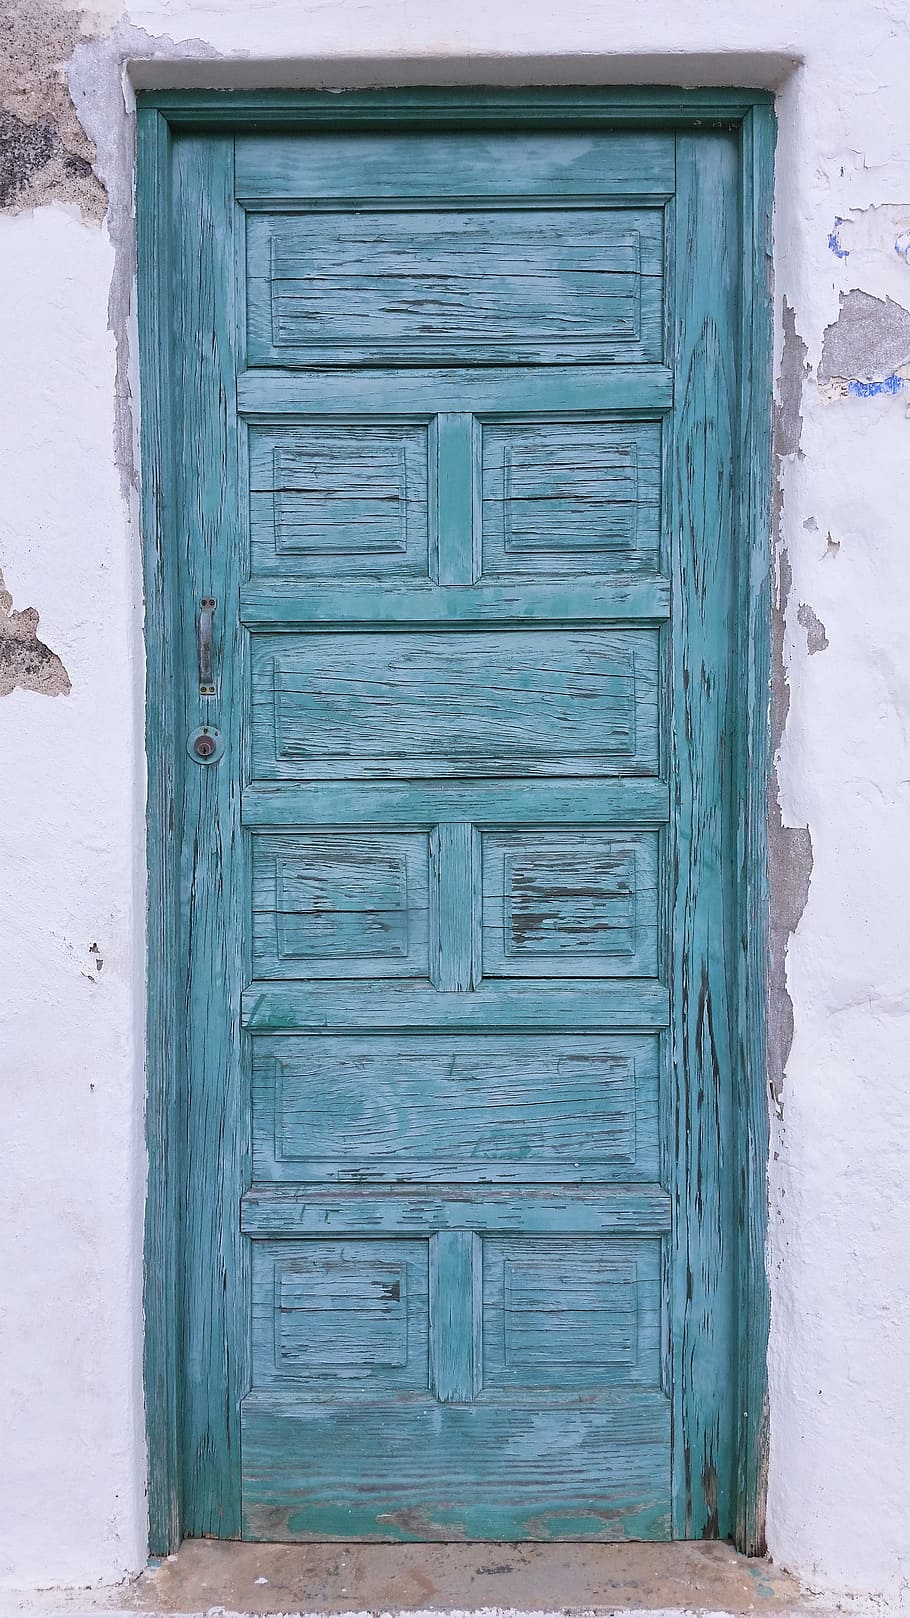 Lanzarote, pintu tua, pintu kayu, pintu biru, arsitektur, pintu masuk, pintu, struktur buatan, bahan kayu, tua